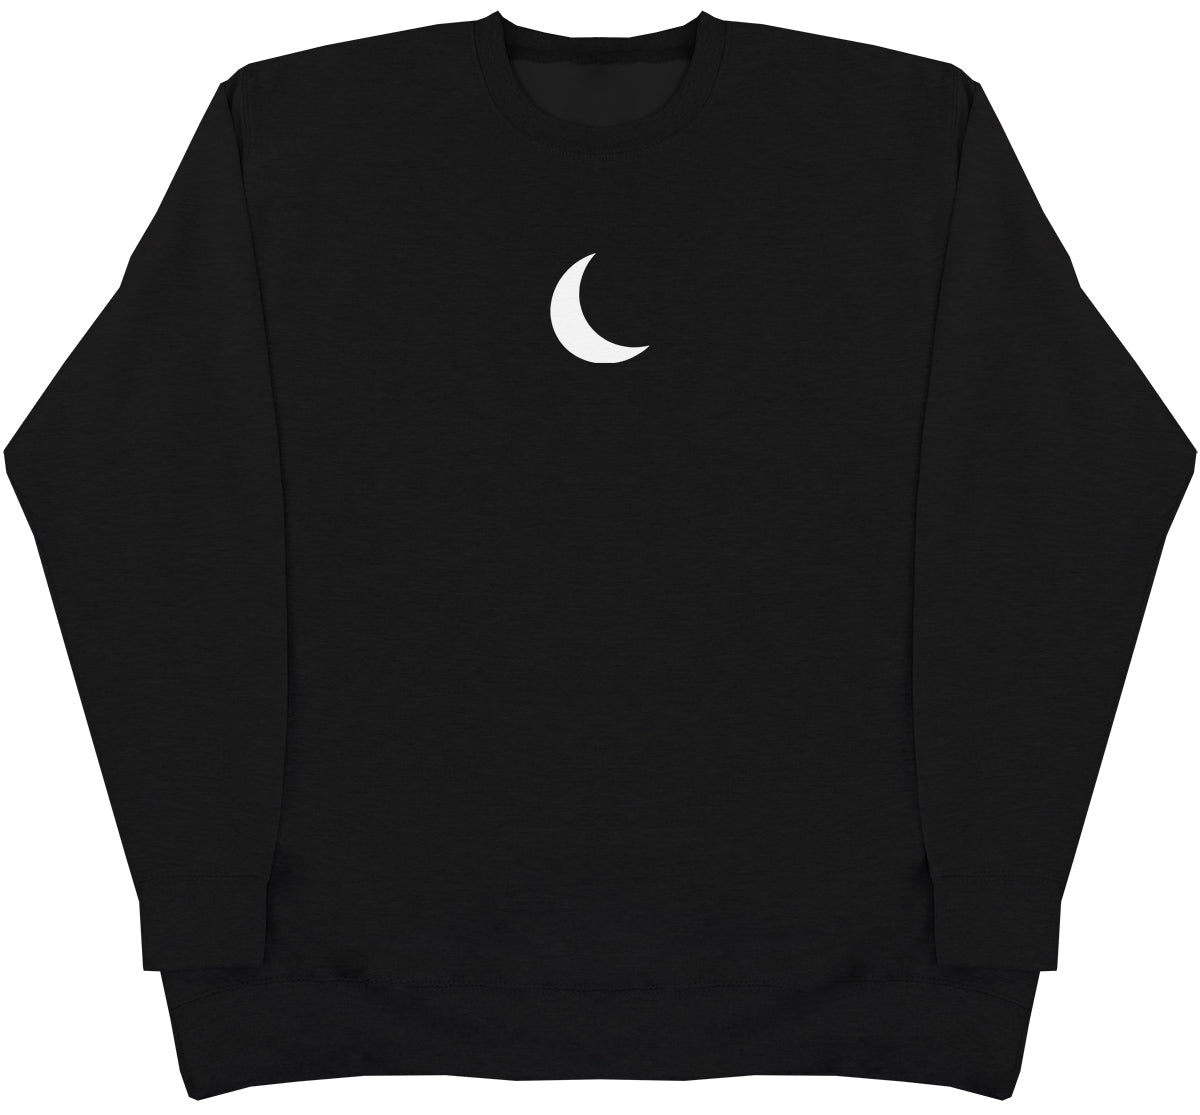 Crescent - Huge Oversized Comfy Original Sweater